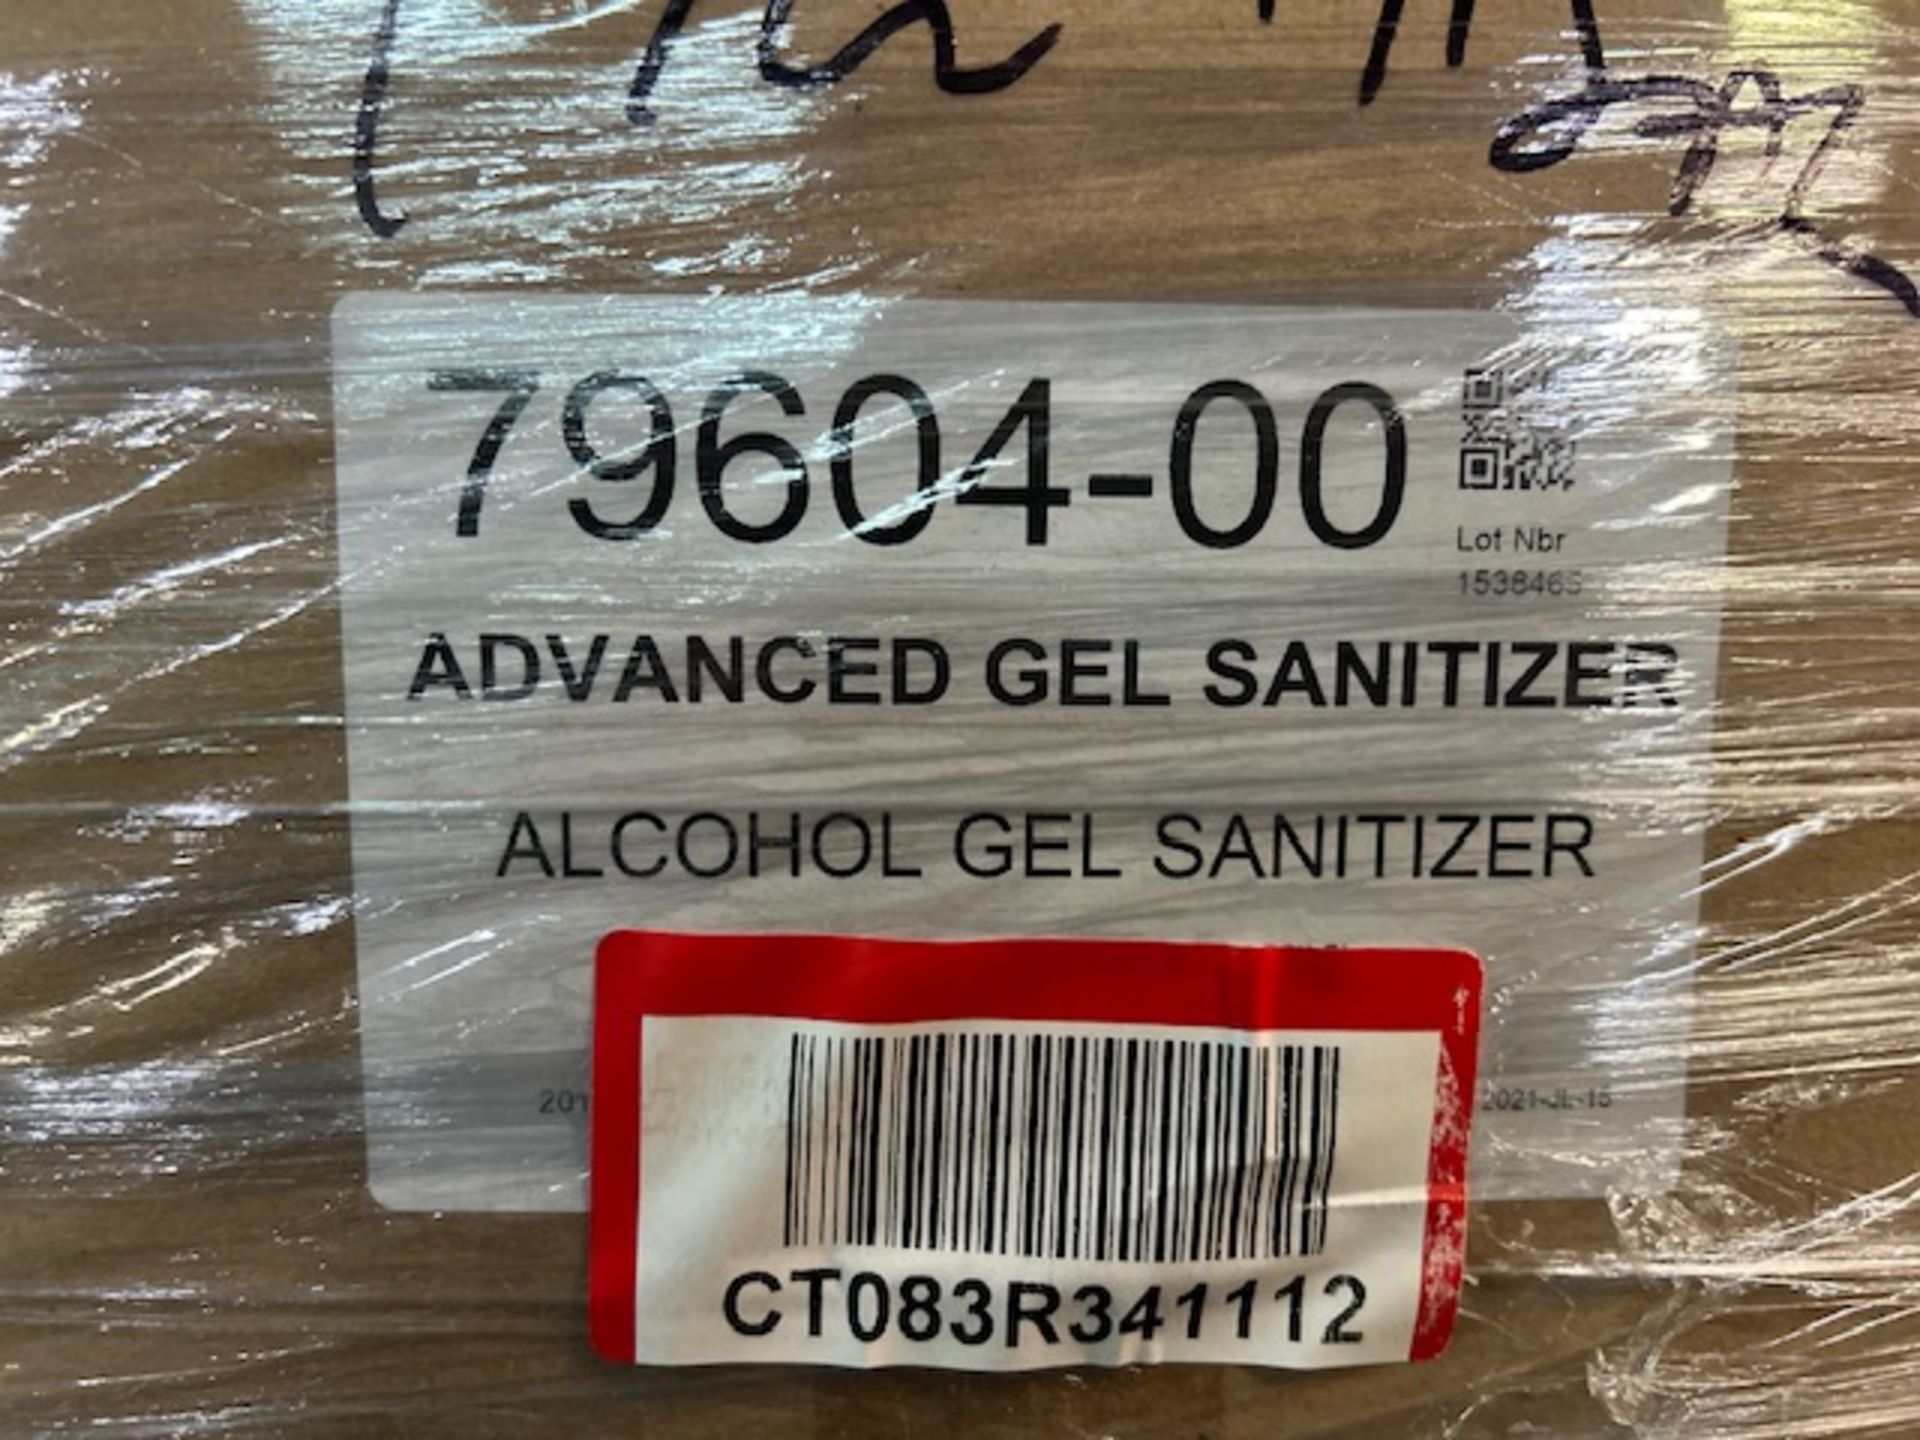 (47) Cases - Betco #79604-00 4/1 Gallon Gel Sanitizer - Image 2 of 3